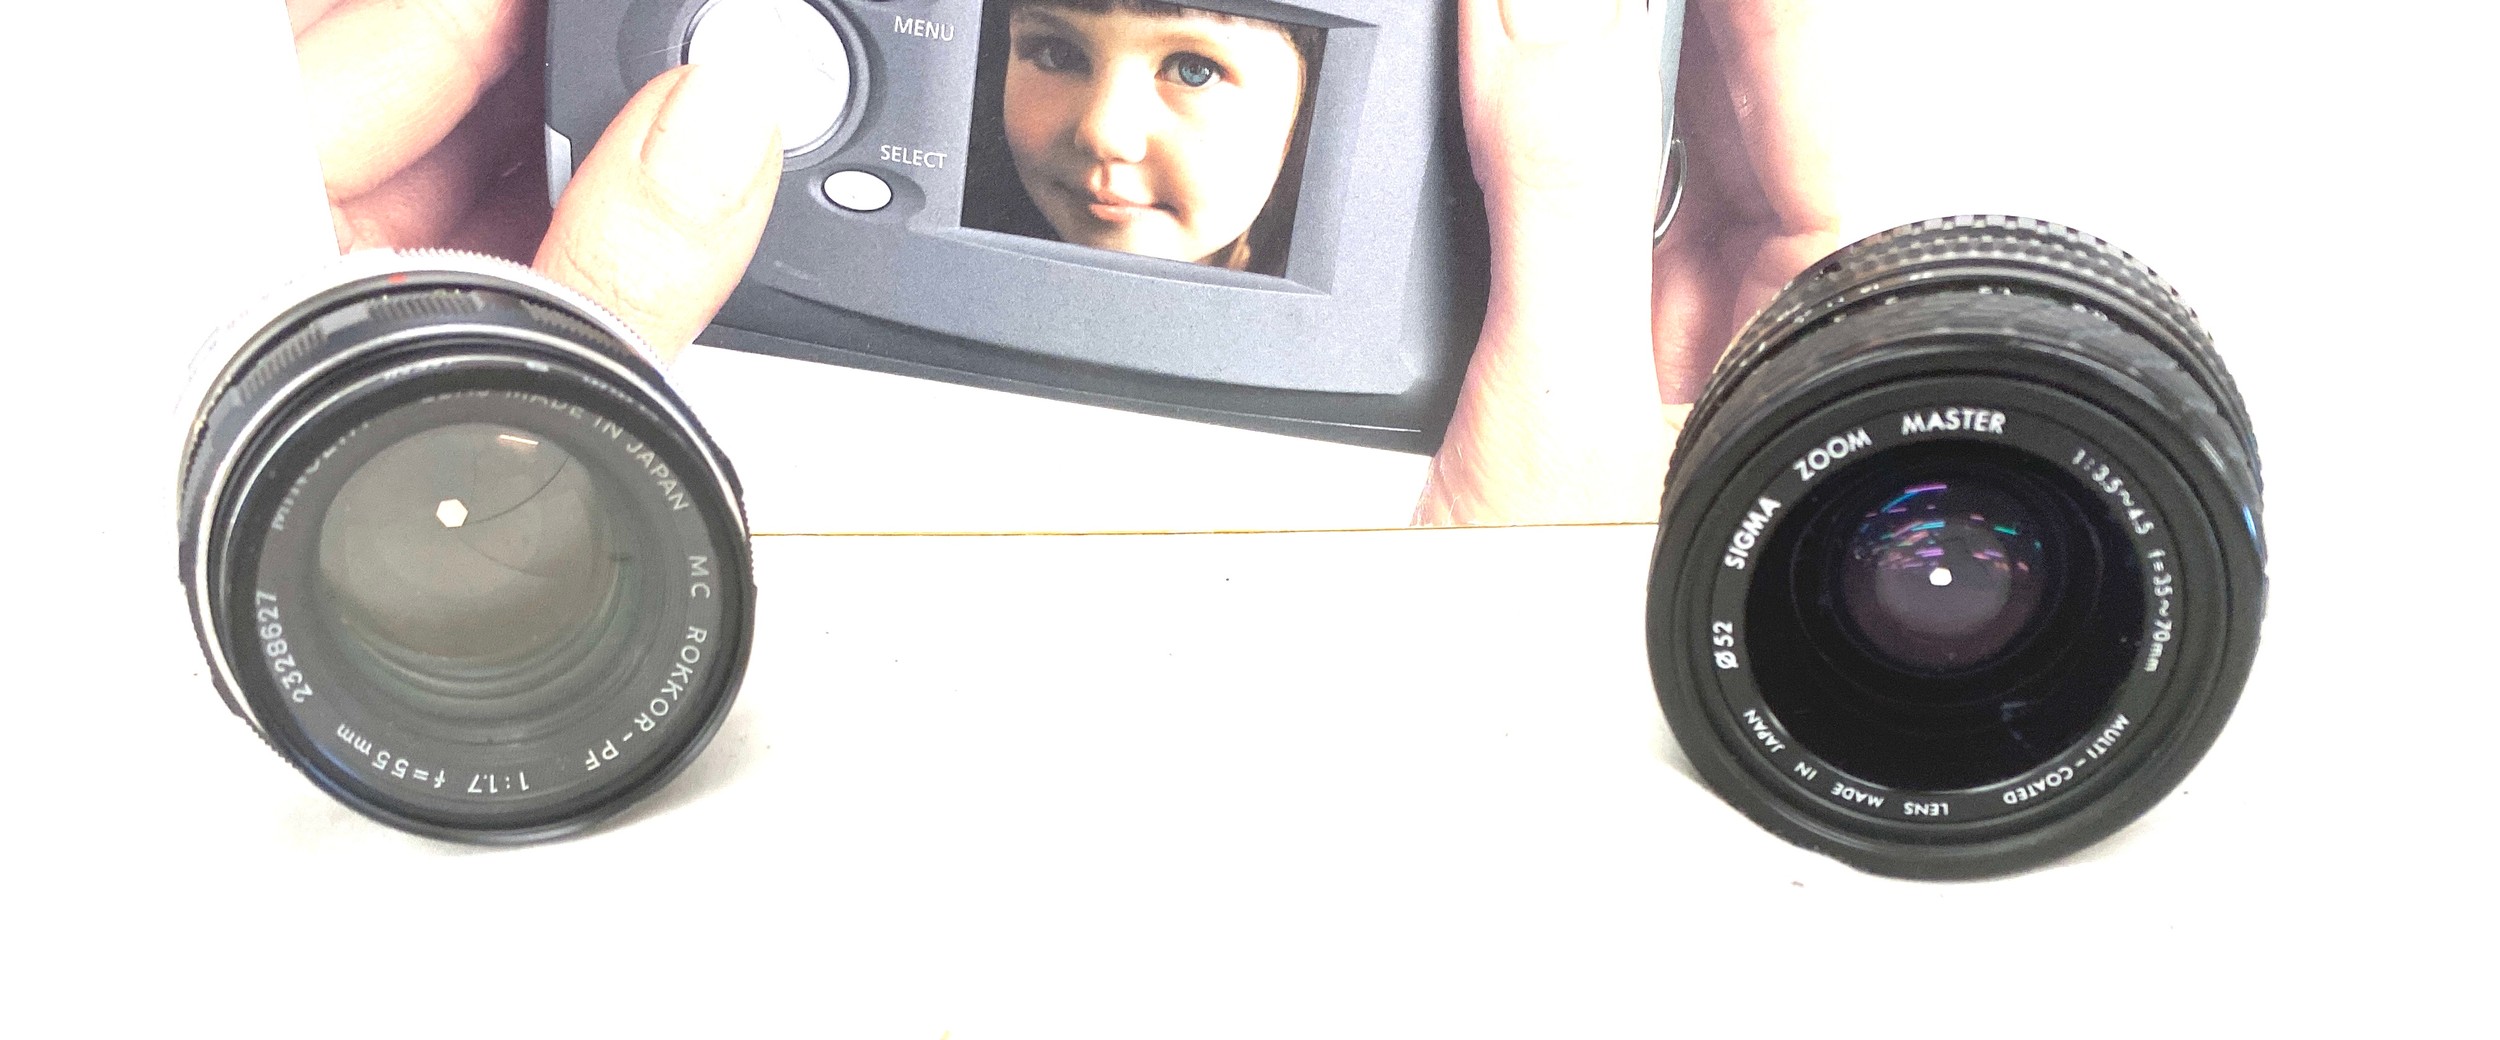 Kodak easyshare DX3600 Zoom digital camera, Sigma Zoom master, multi coated lens, Minolta Mcrokkor - - Image 4 of 4